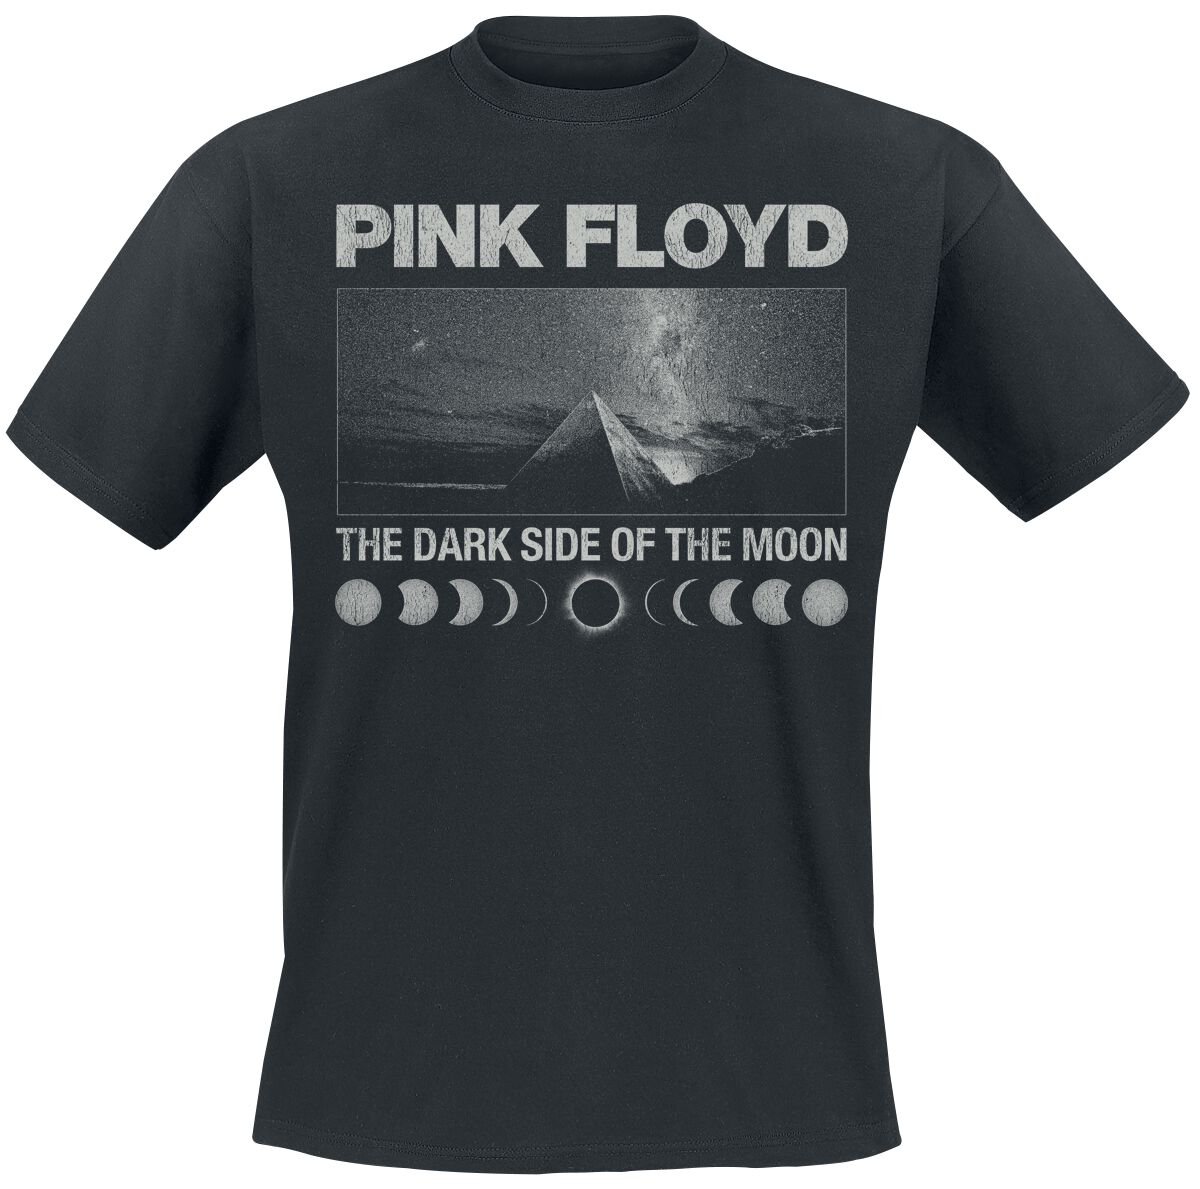 Pink Floyd Vintage Poster T-Shirt schwarz in L